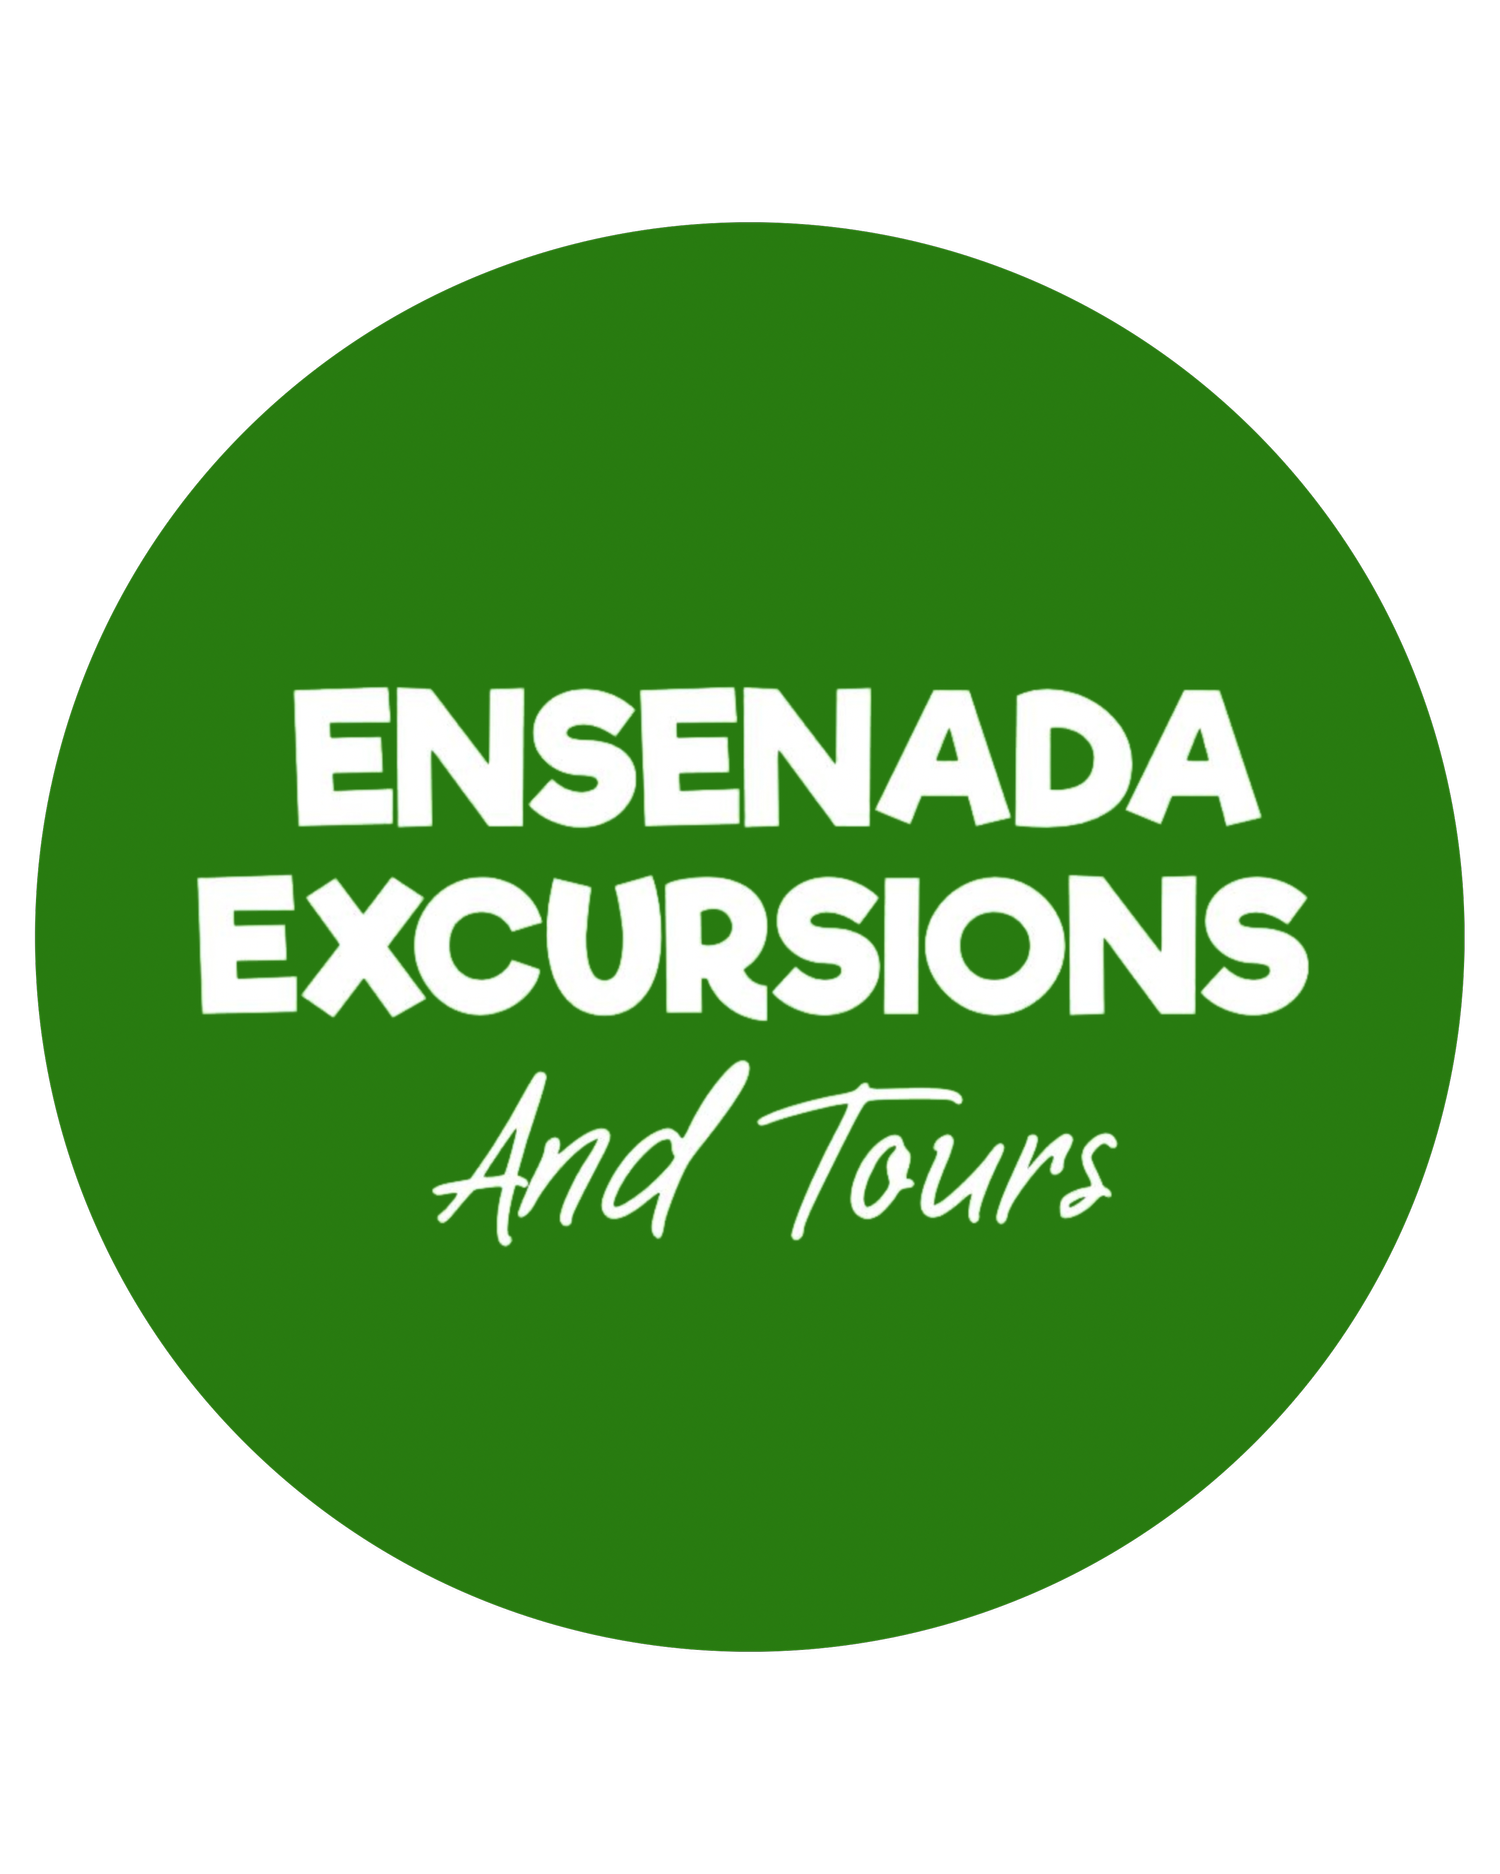 Ensenada Excursions and Tours: Horseback Riding, Zipline, ATV, Wine Tasting, Yatch, Kayak Shore Excursions